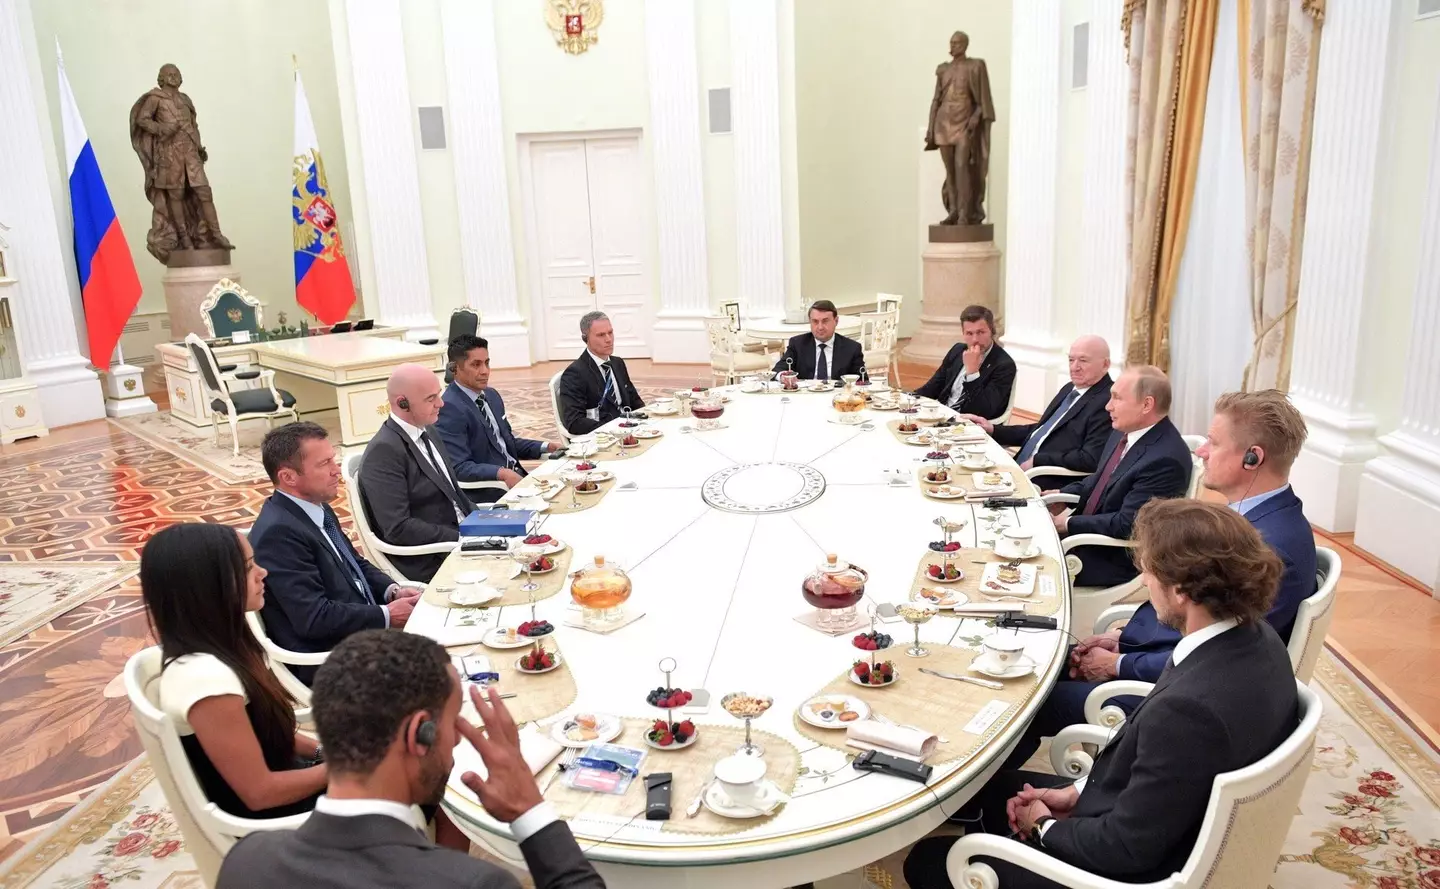 Scott and Ferdinand were part of a delegation to meet Putin.